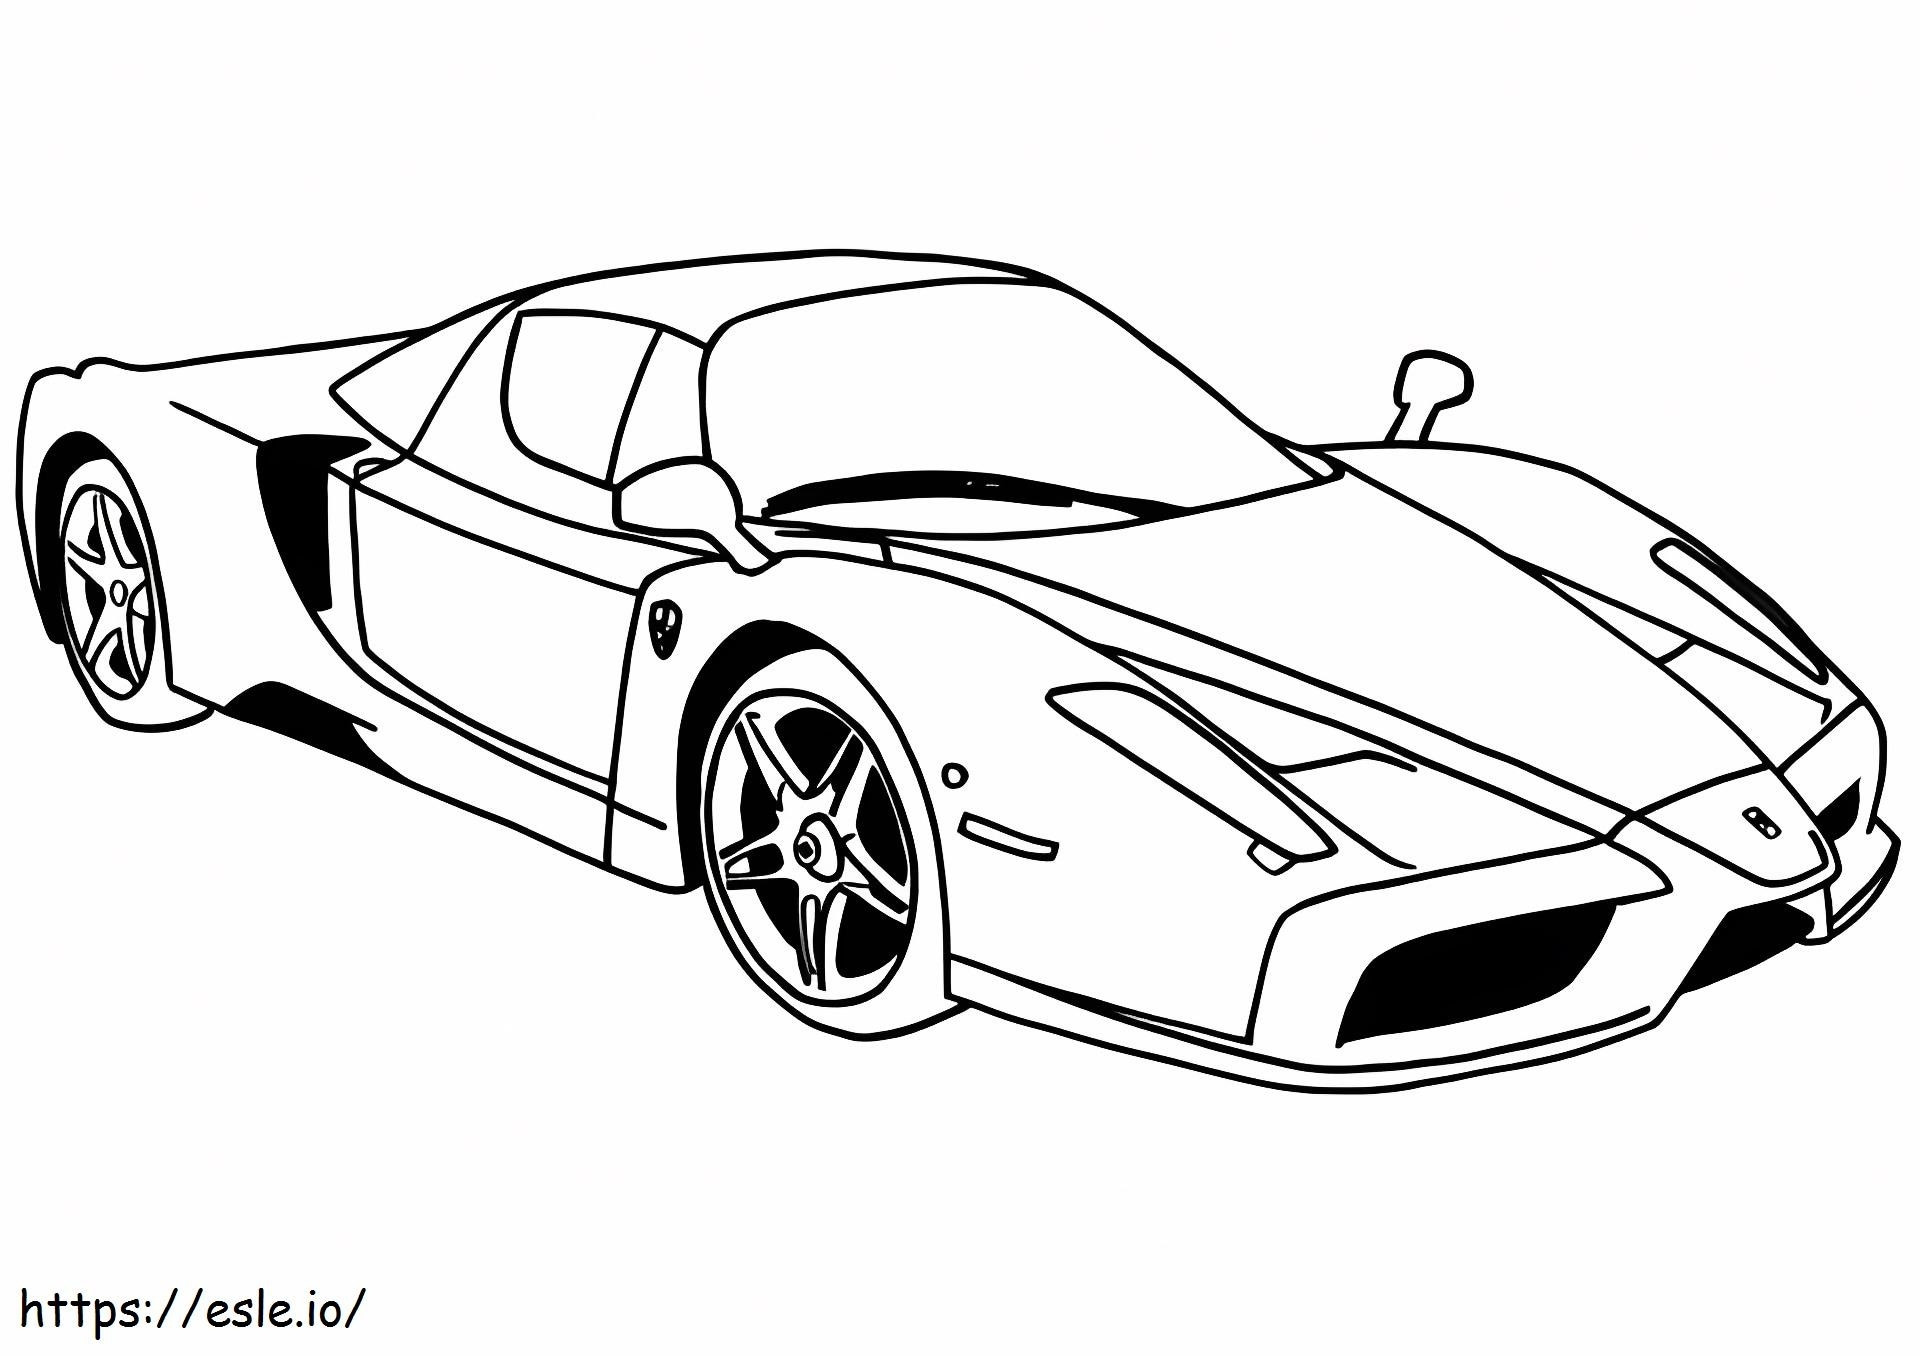 1527151433 Ferrari Enzo coloring page